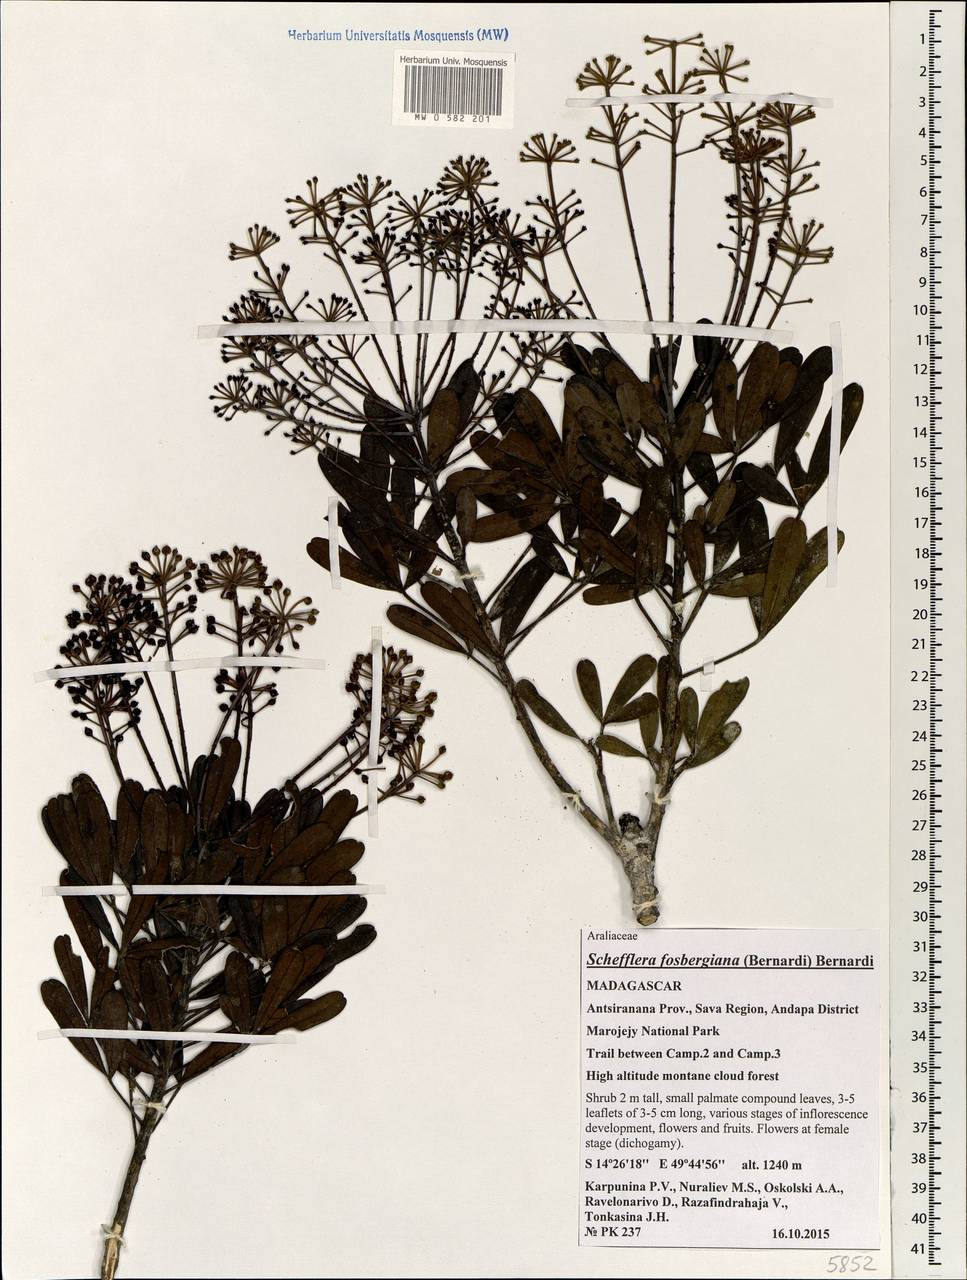 Neocussonia fosbergiana (Bernardi) Lowry, G. M. Plunkett, Gostel & Frodin, Africa (AFR) (Madagascar)